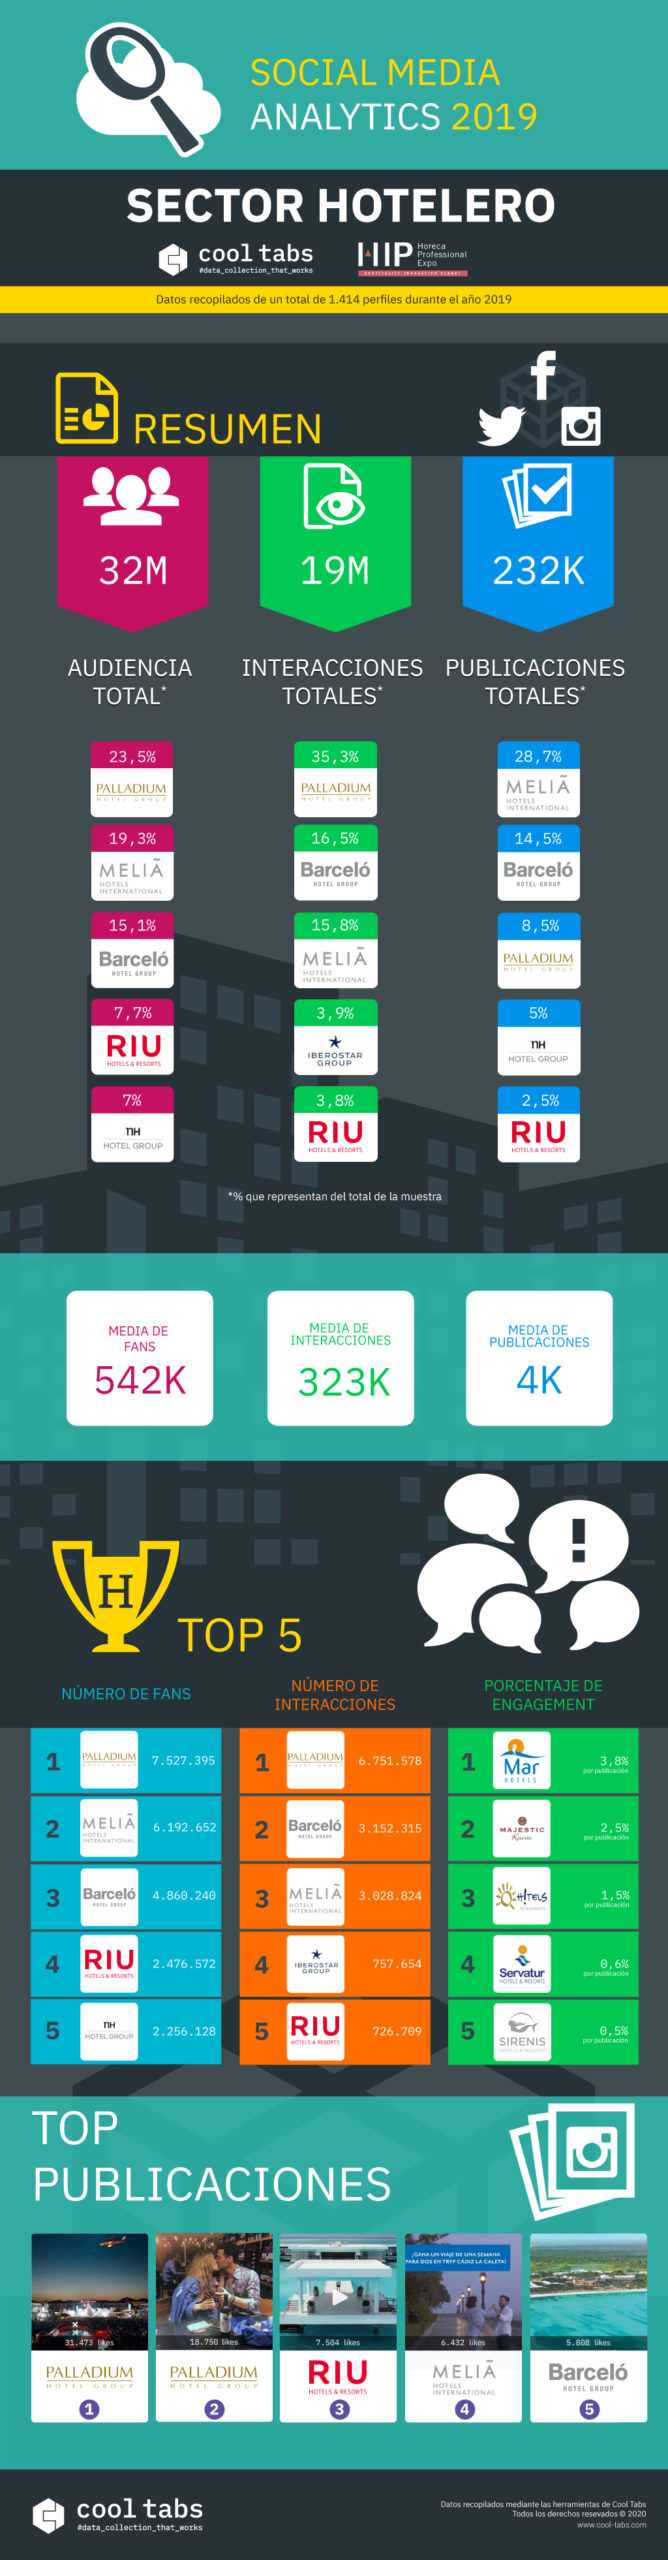 infografia-sector-hotelero-redes-sociales